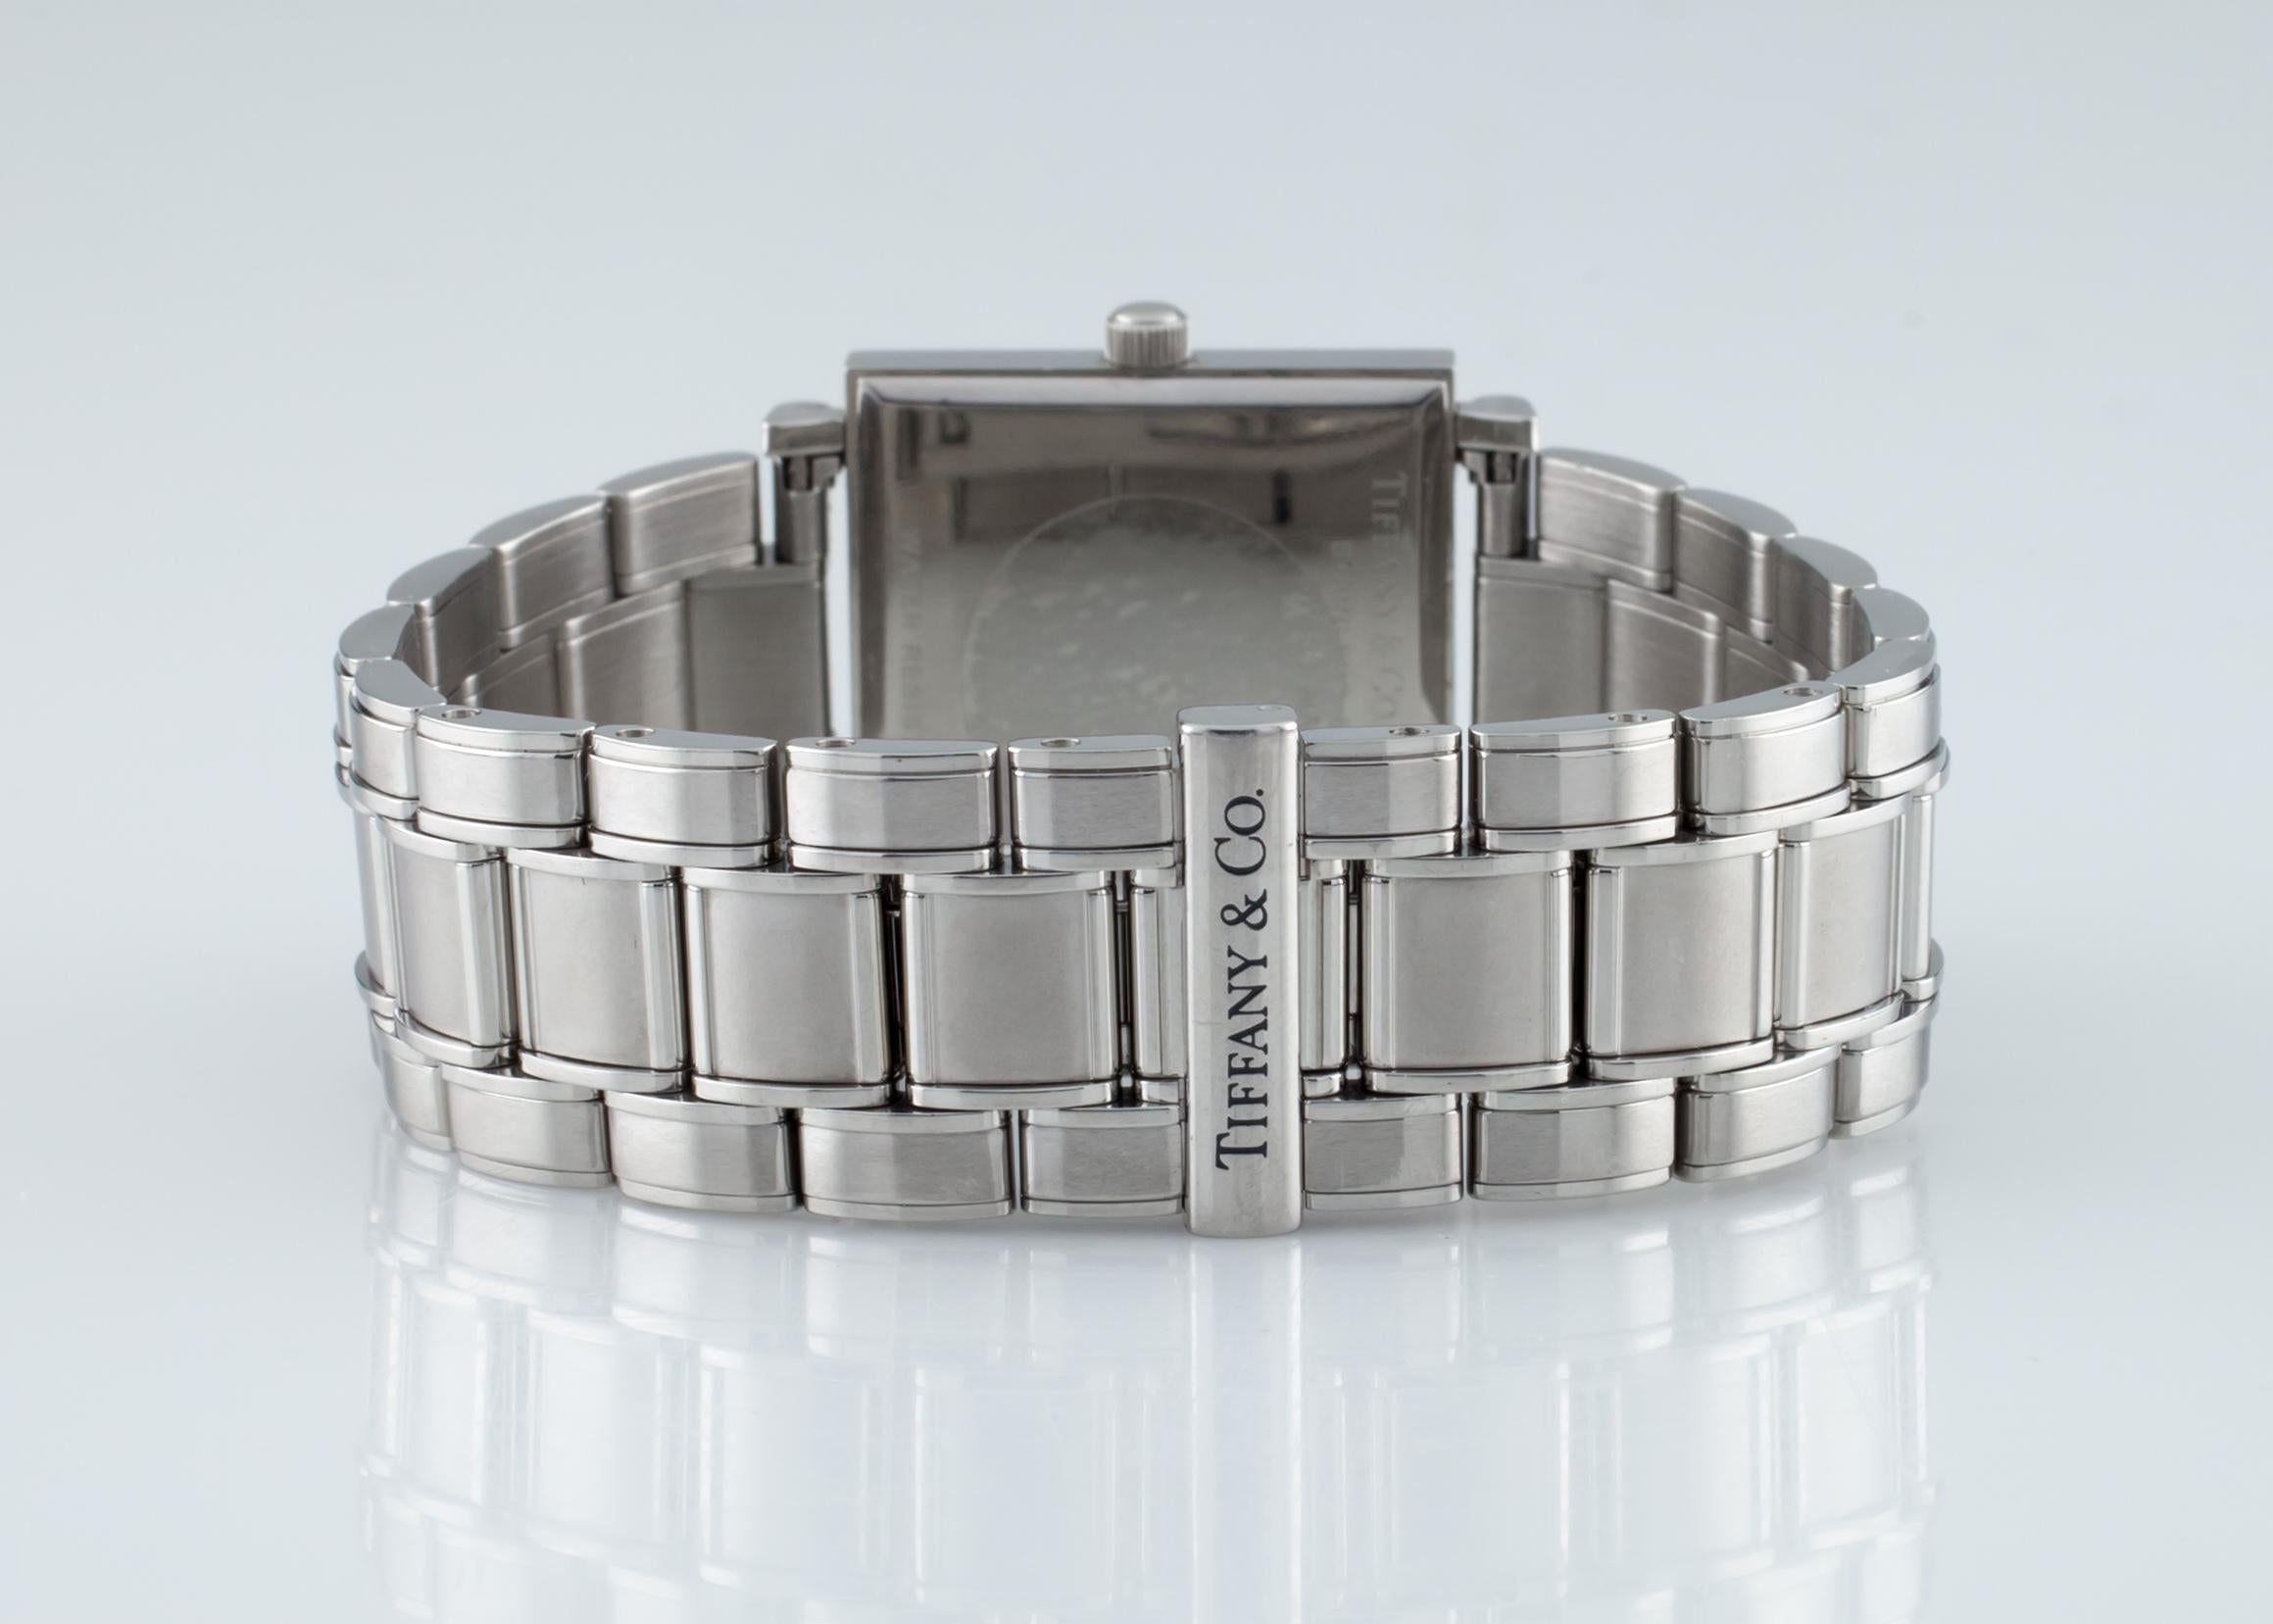 Art Deco Tiffany & Co. Atlas Quartz Square Watch Stainless Steel W/ Date For Sale